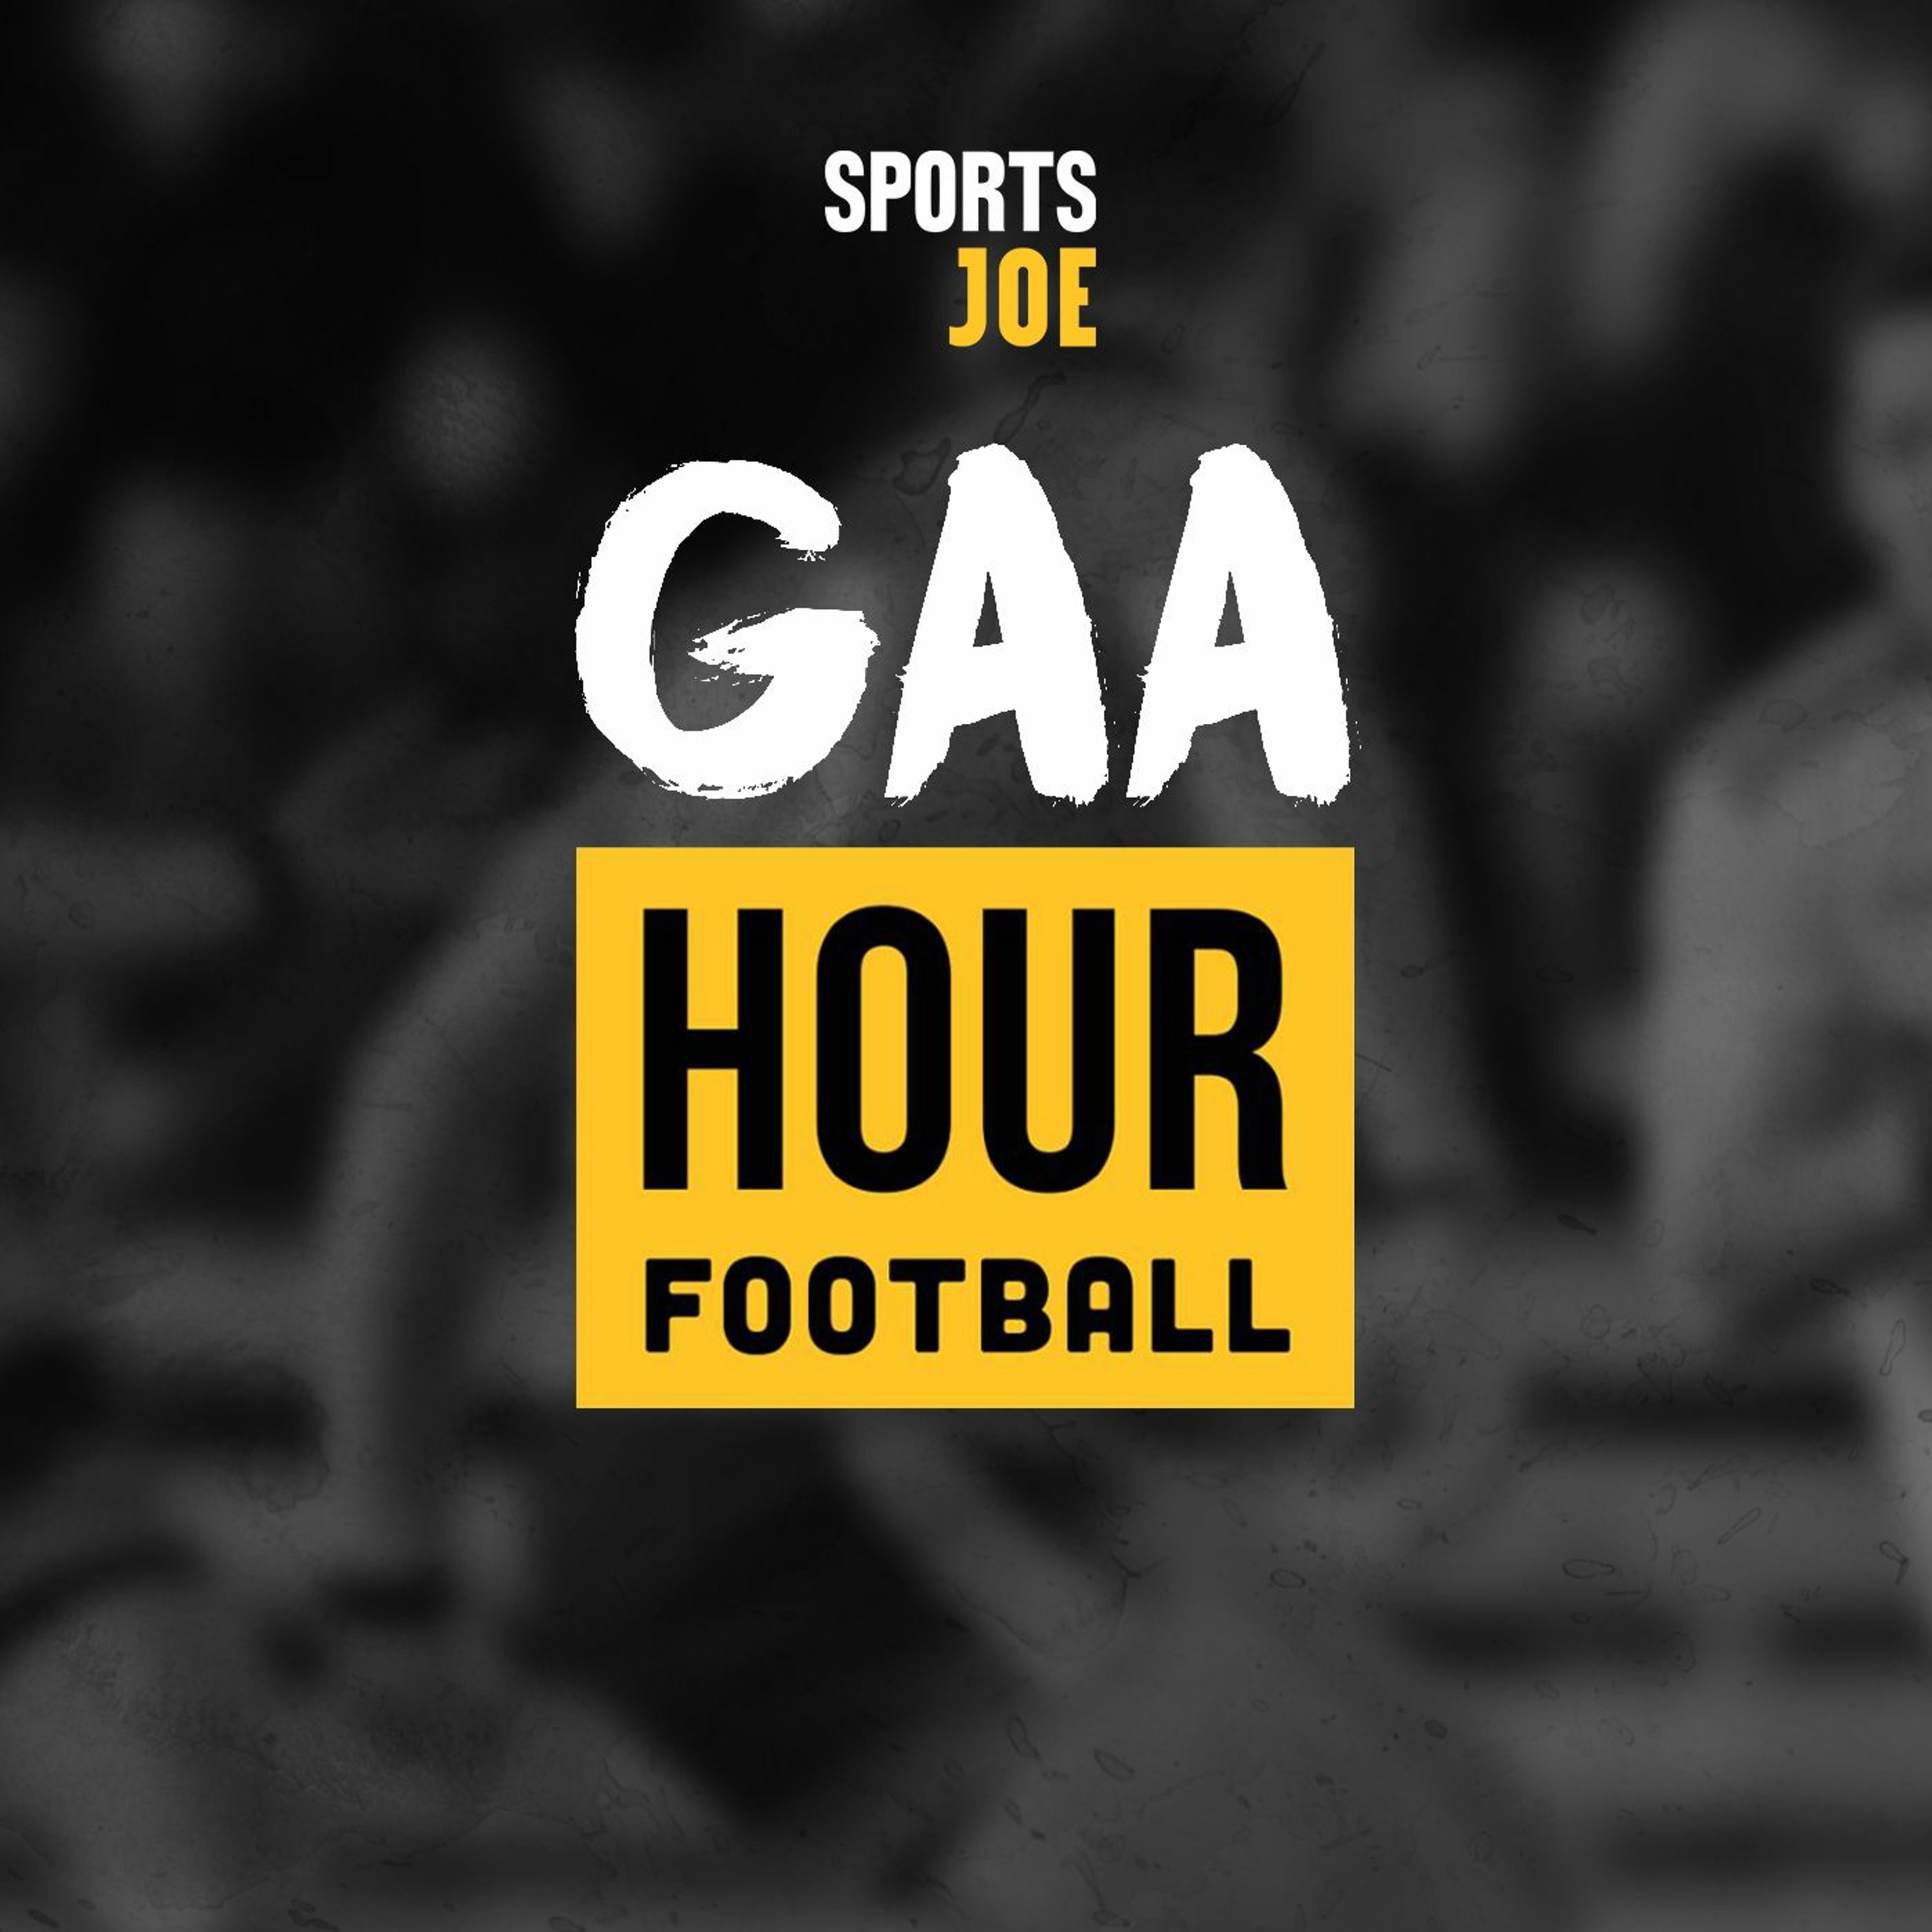 Donegal impressive, Sean O’Shea role & short kickout risk